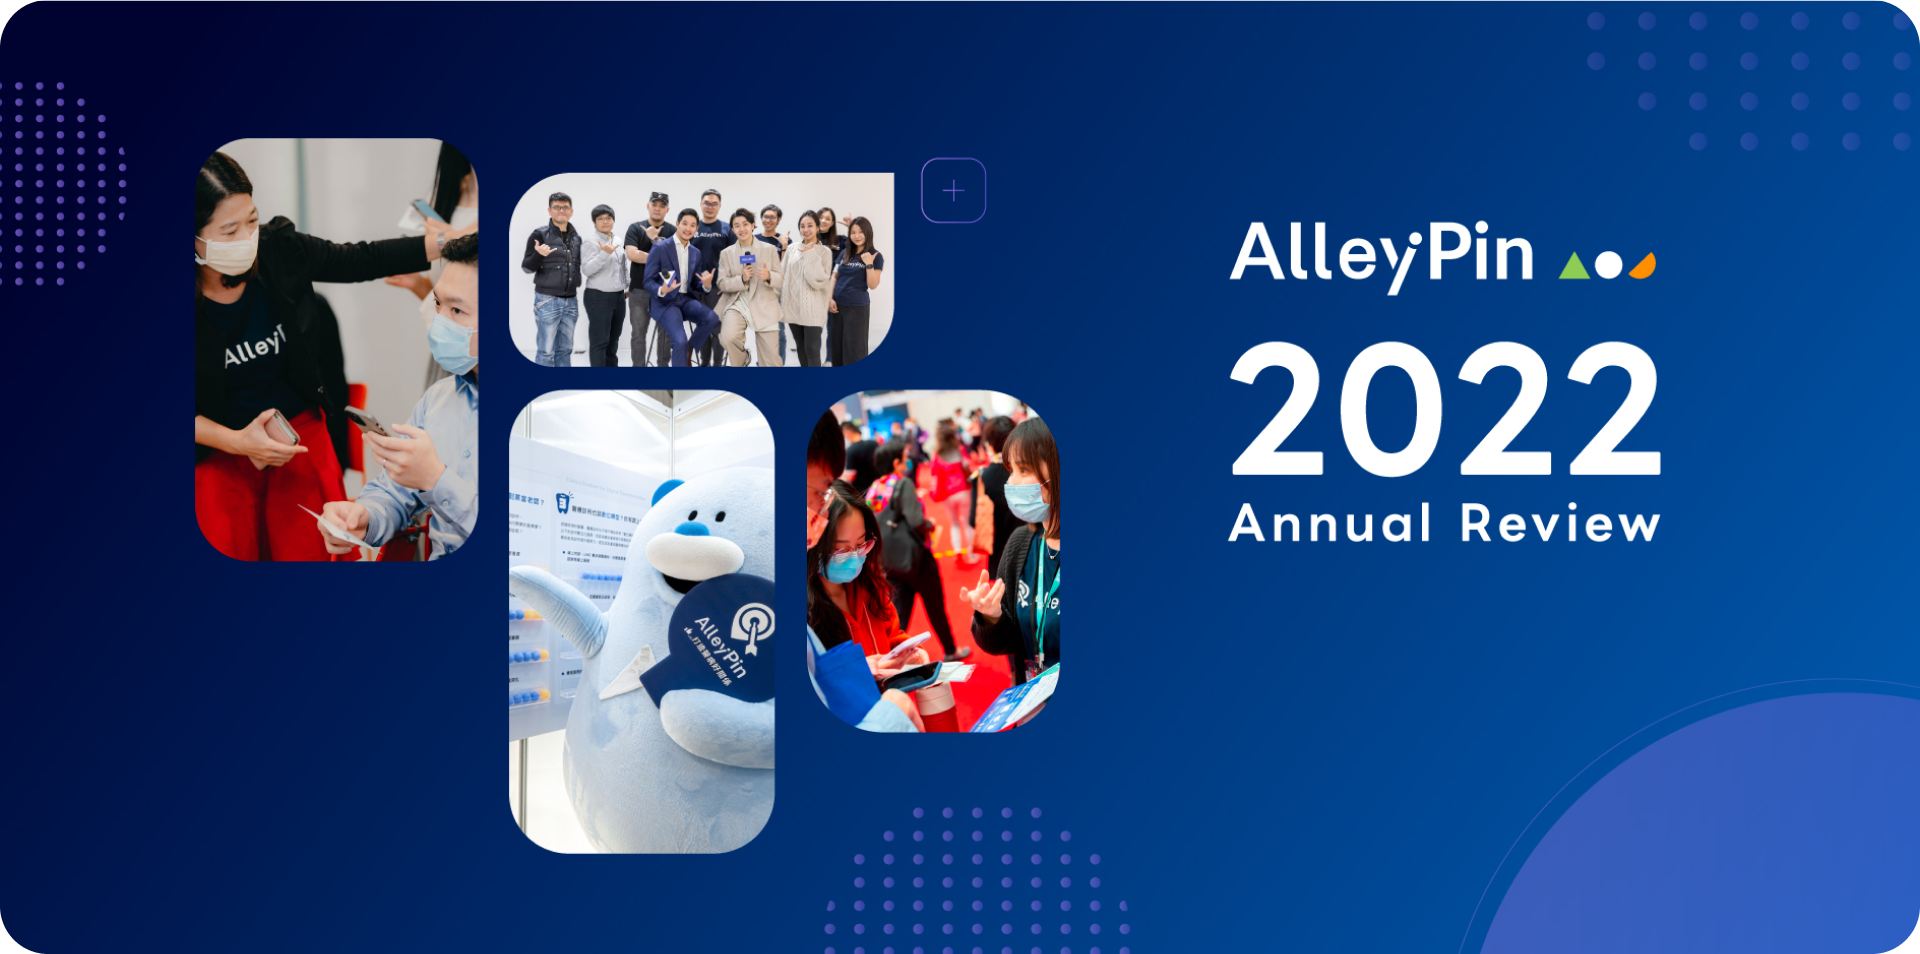 2022 AlleyPin 年度總回顧：全台服務突破 700 間診所！數位力賦能強化醫療診所競爭力